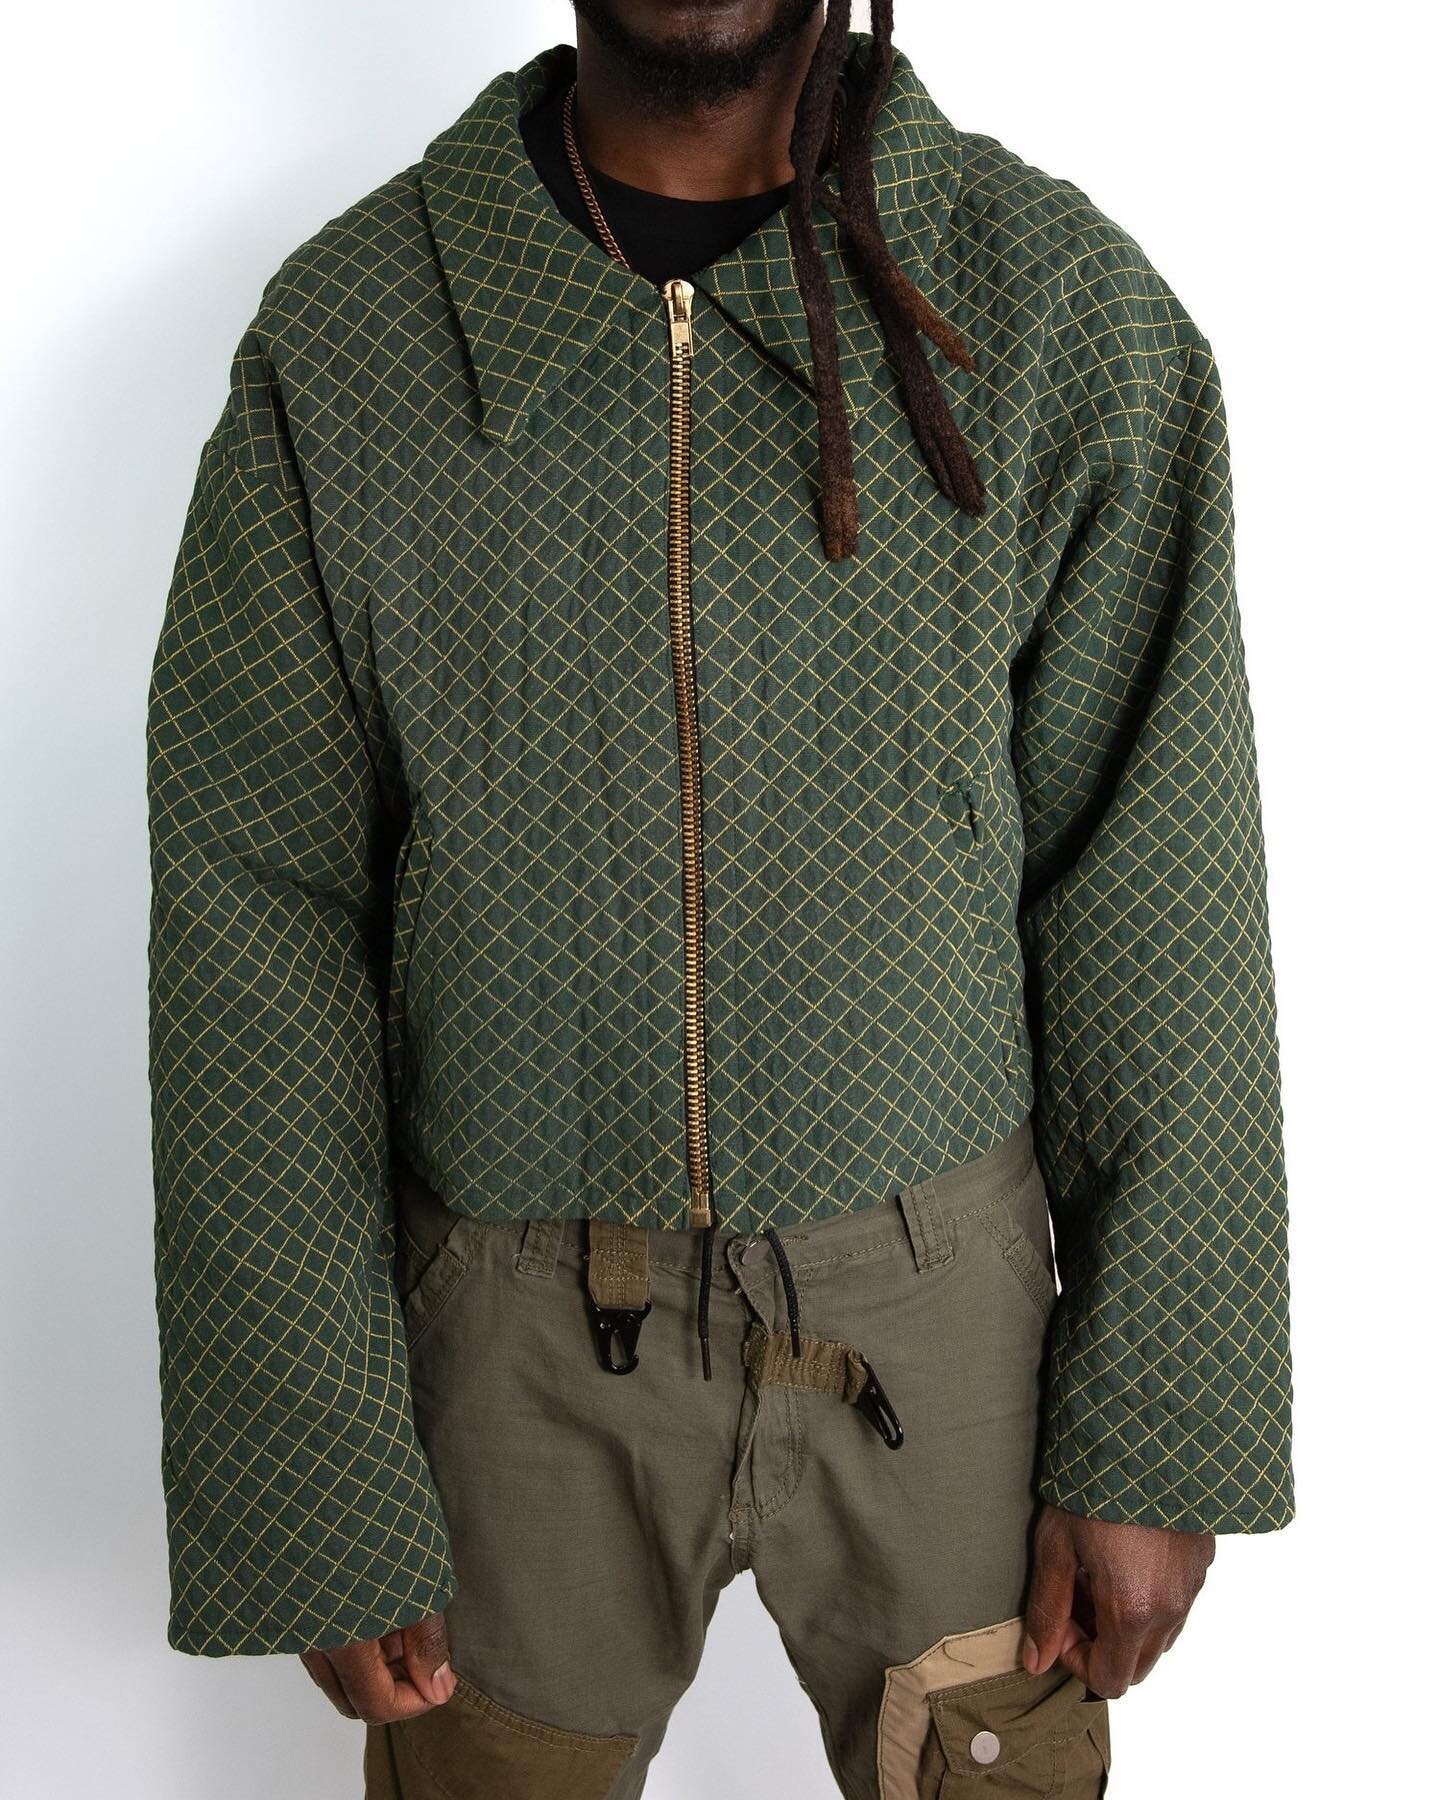 archived verdant box jacket